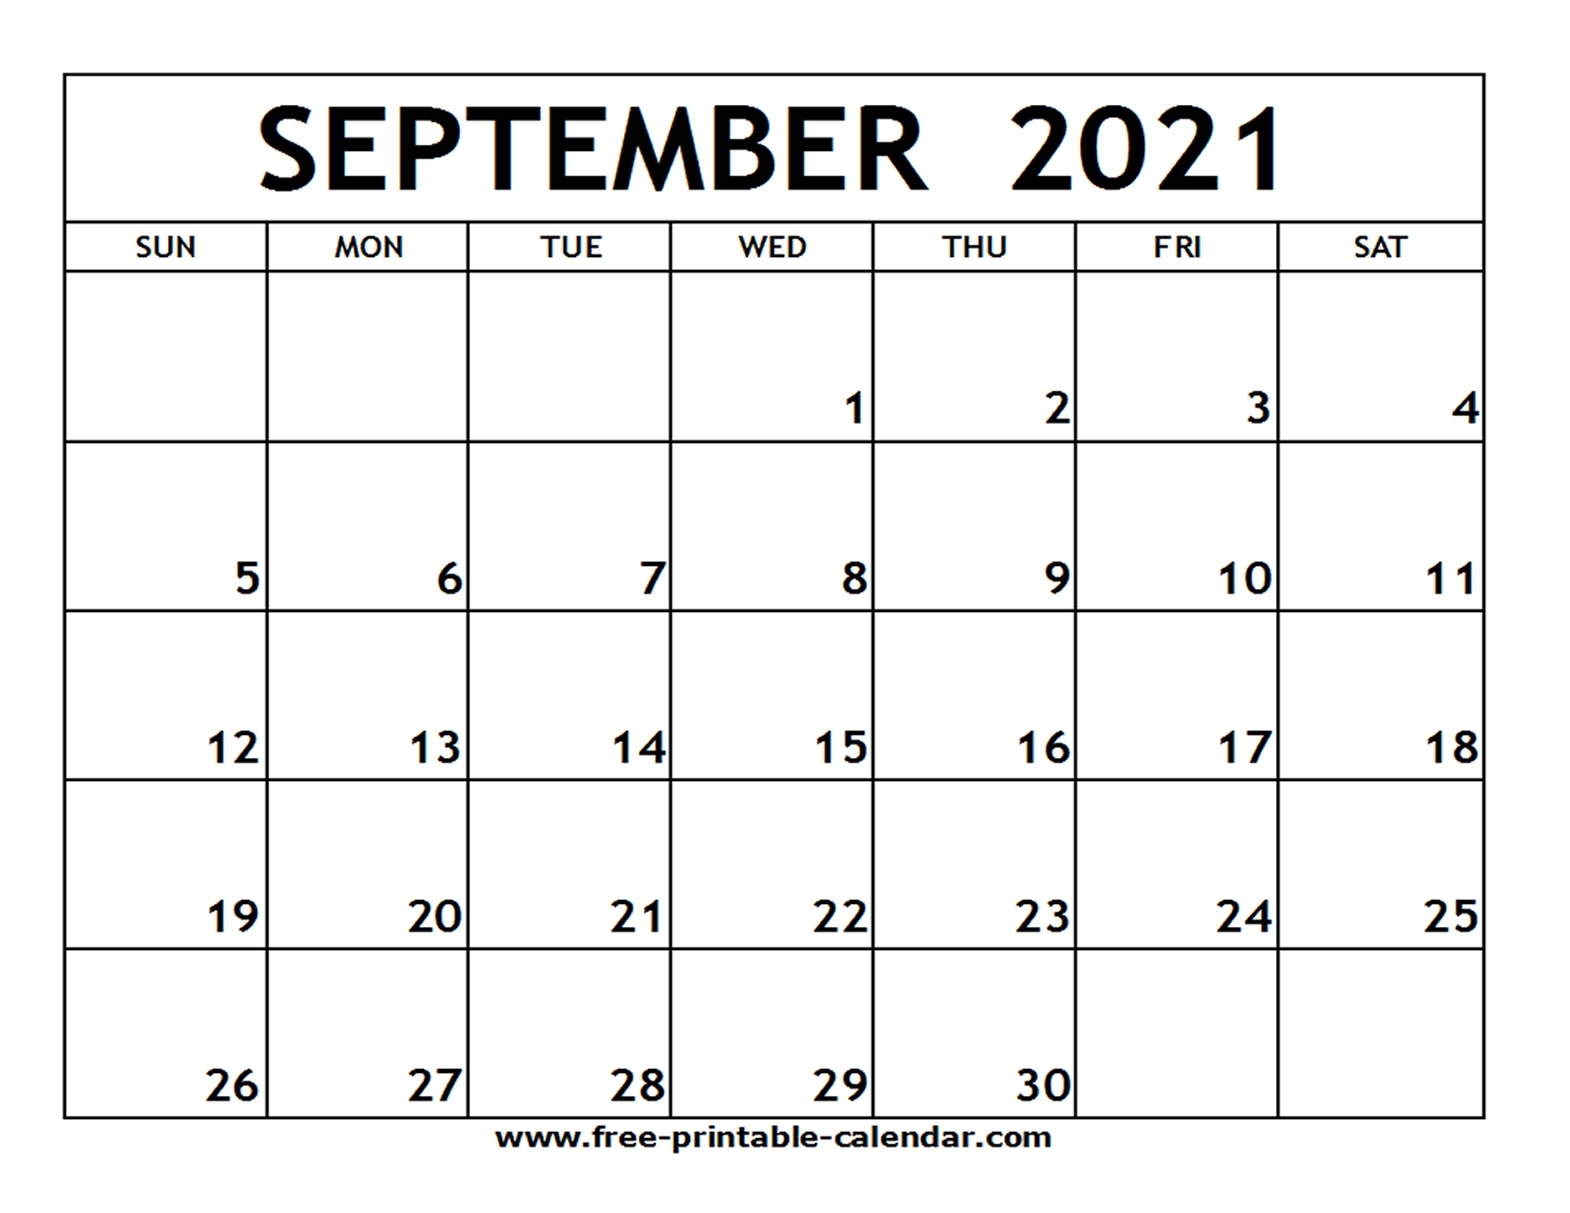 September 2021 Printable Calendar - Free-Printable-Calendar